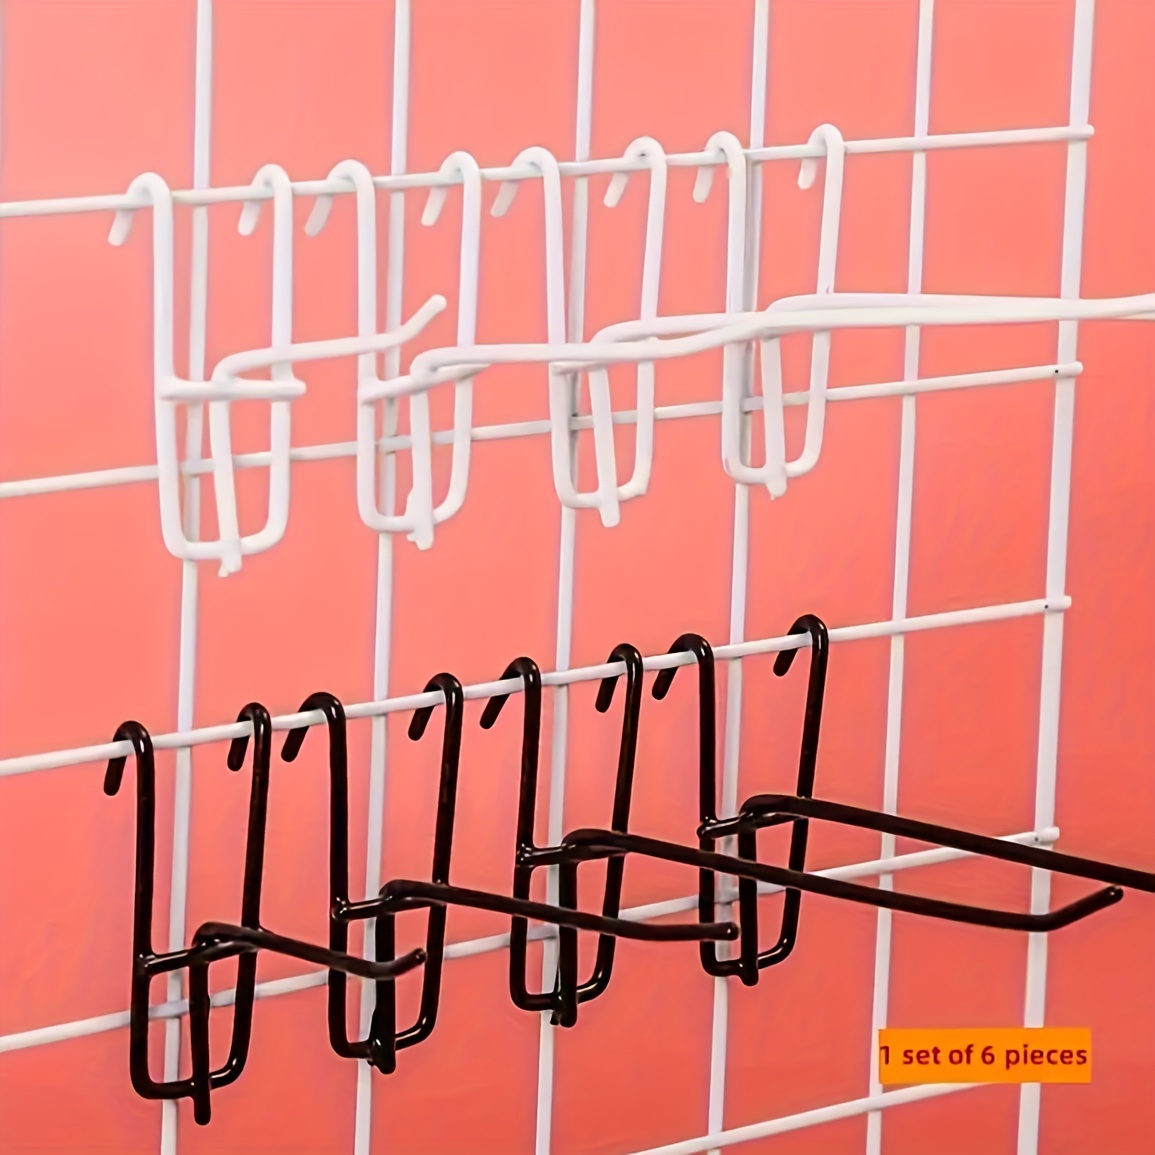 

6pcs Grid Classic Style Metal Wall Hooks, 4-inch Length, Black & White Pegboard Panel Display Hooks, Wall Bracket Grid Hangers, Multi-use Tool Organizing Hooks For Home, Office, Room Decor